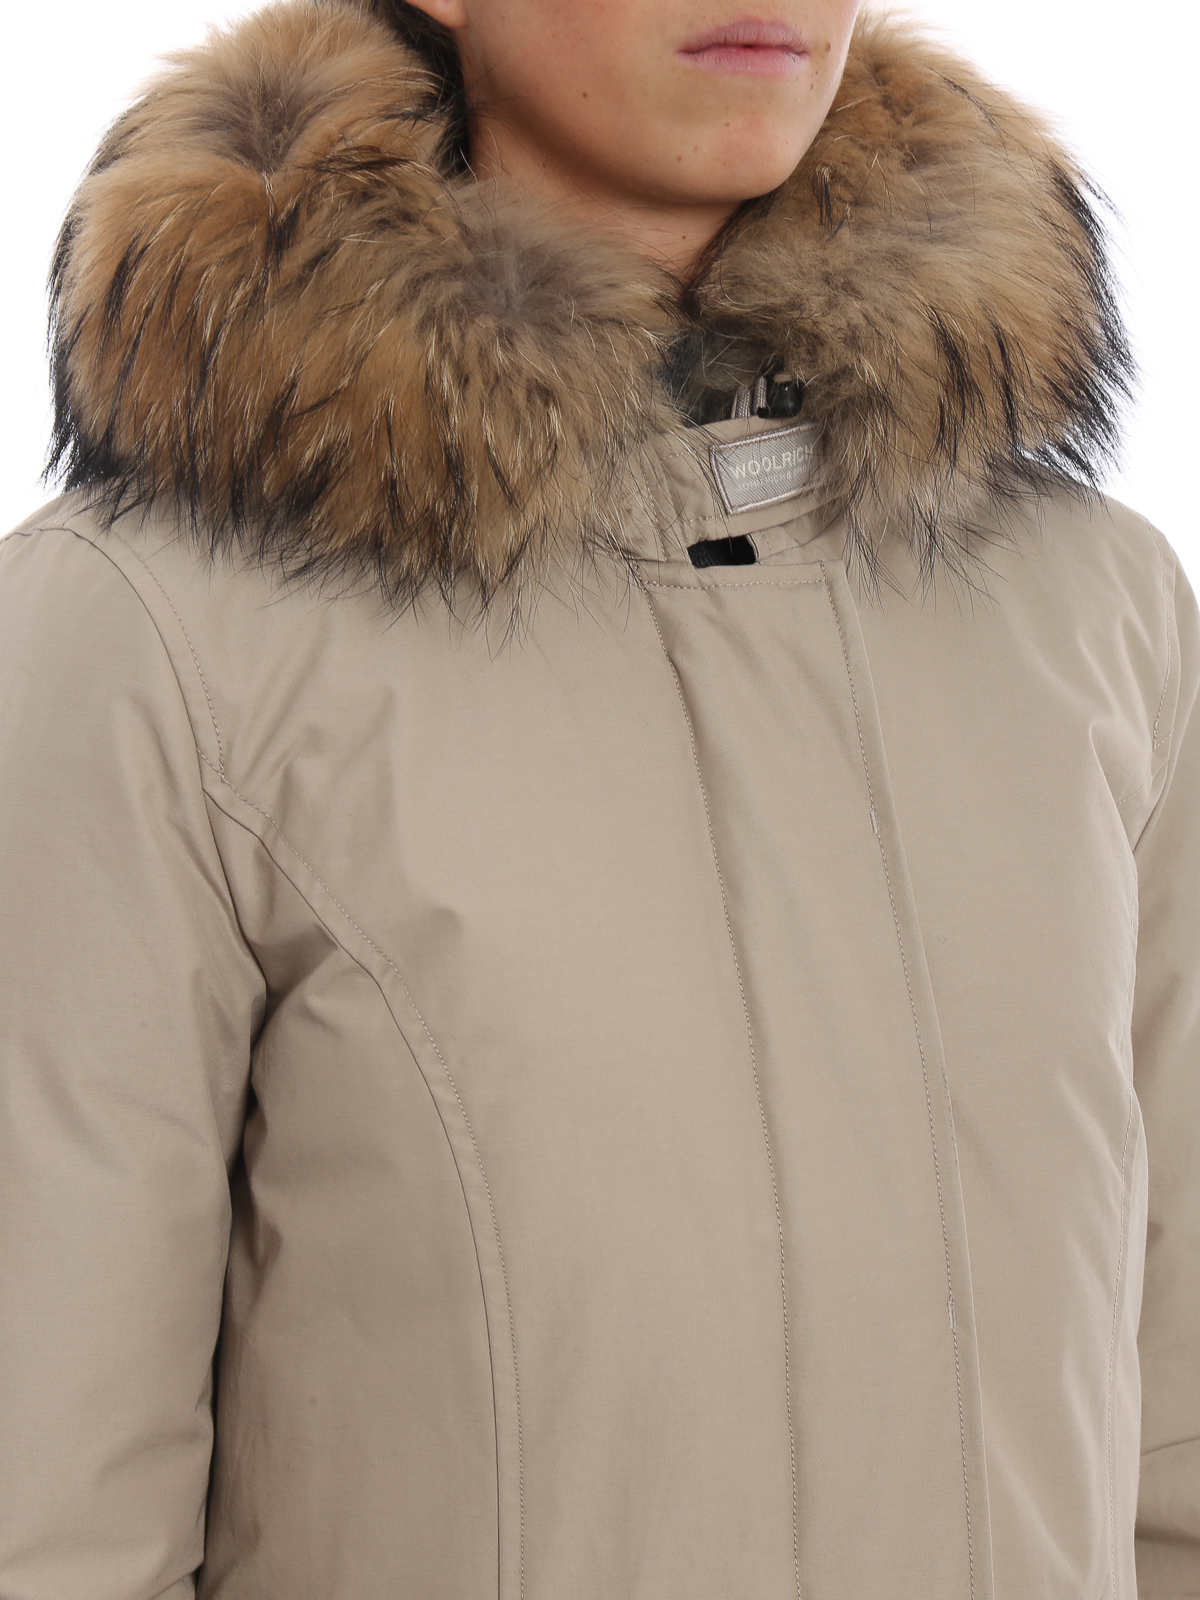 leeg correct Kwik Padded coats Woolrich - Arctic Parka pearl coated cotton padded coat -  WWCPS1447CN02PER